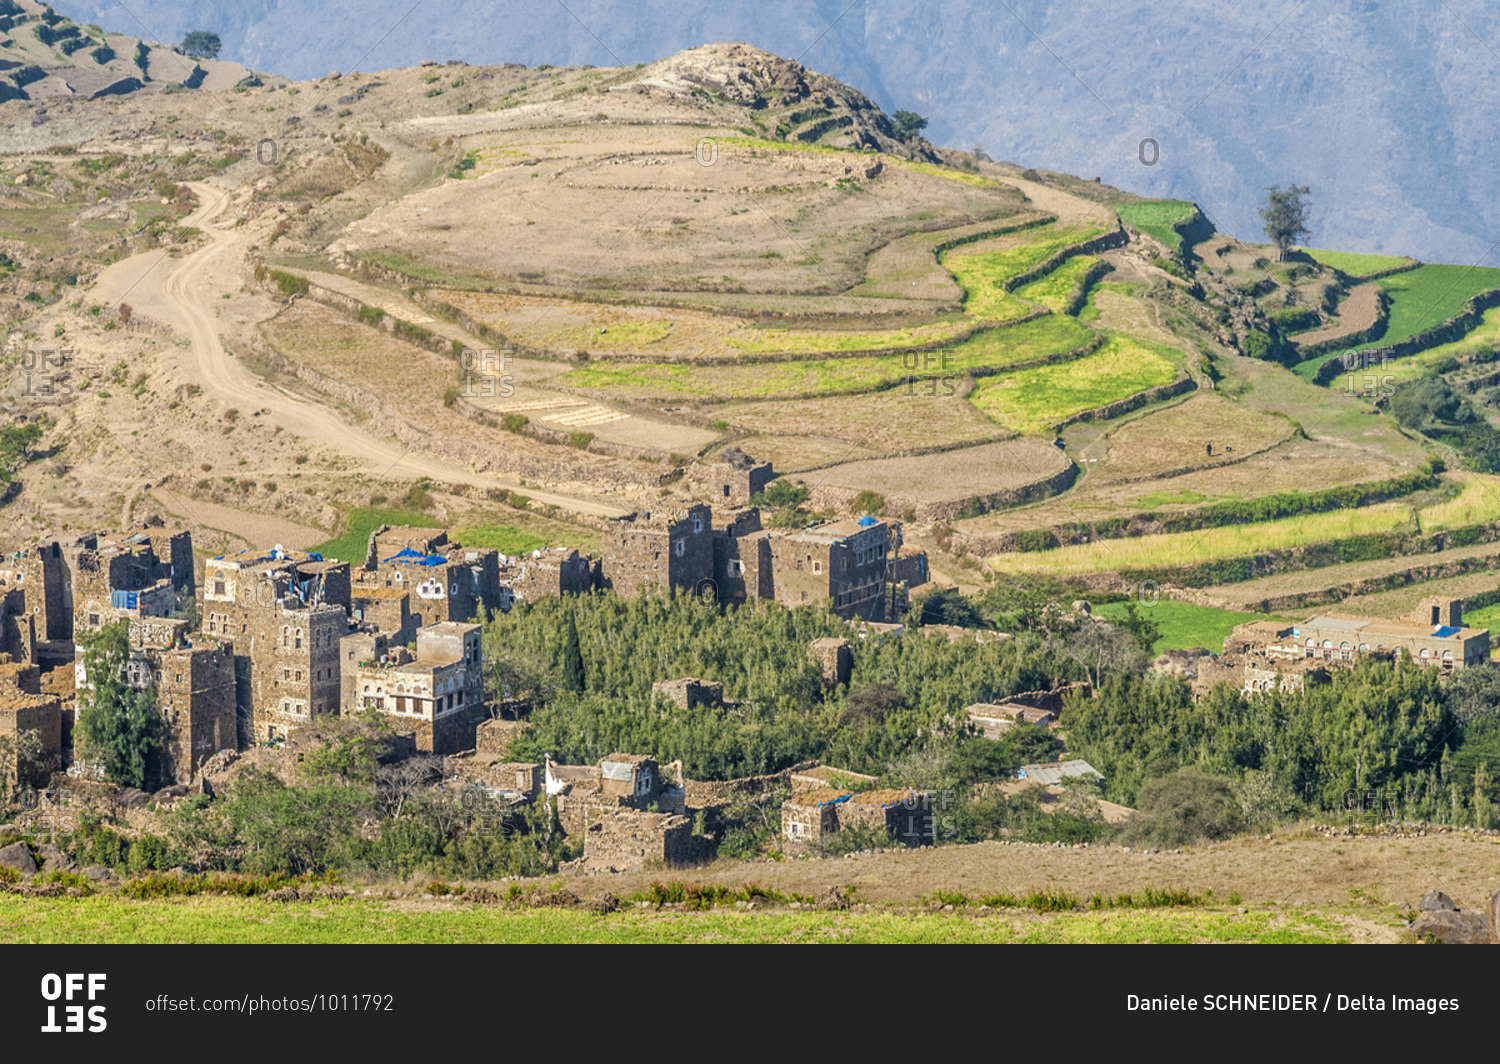 Middle East, Yemen, Centre West, Jebel Harraz region (UNESCO World Heritage Tentative list) hilltop village and terrace cultivation (shooting 03/2007)